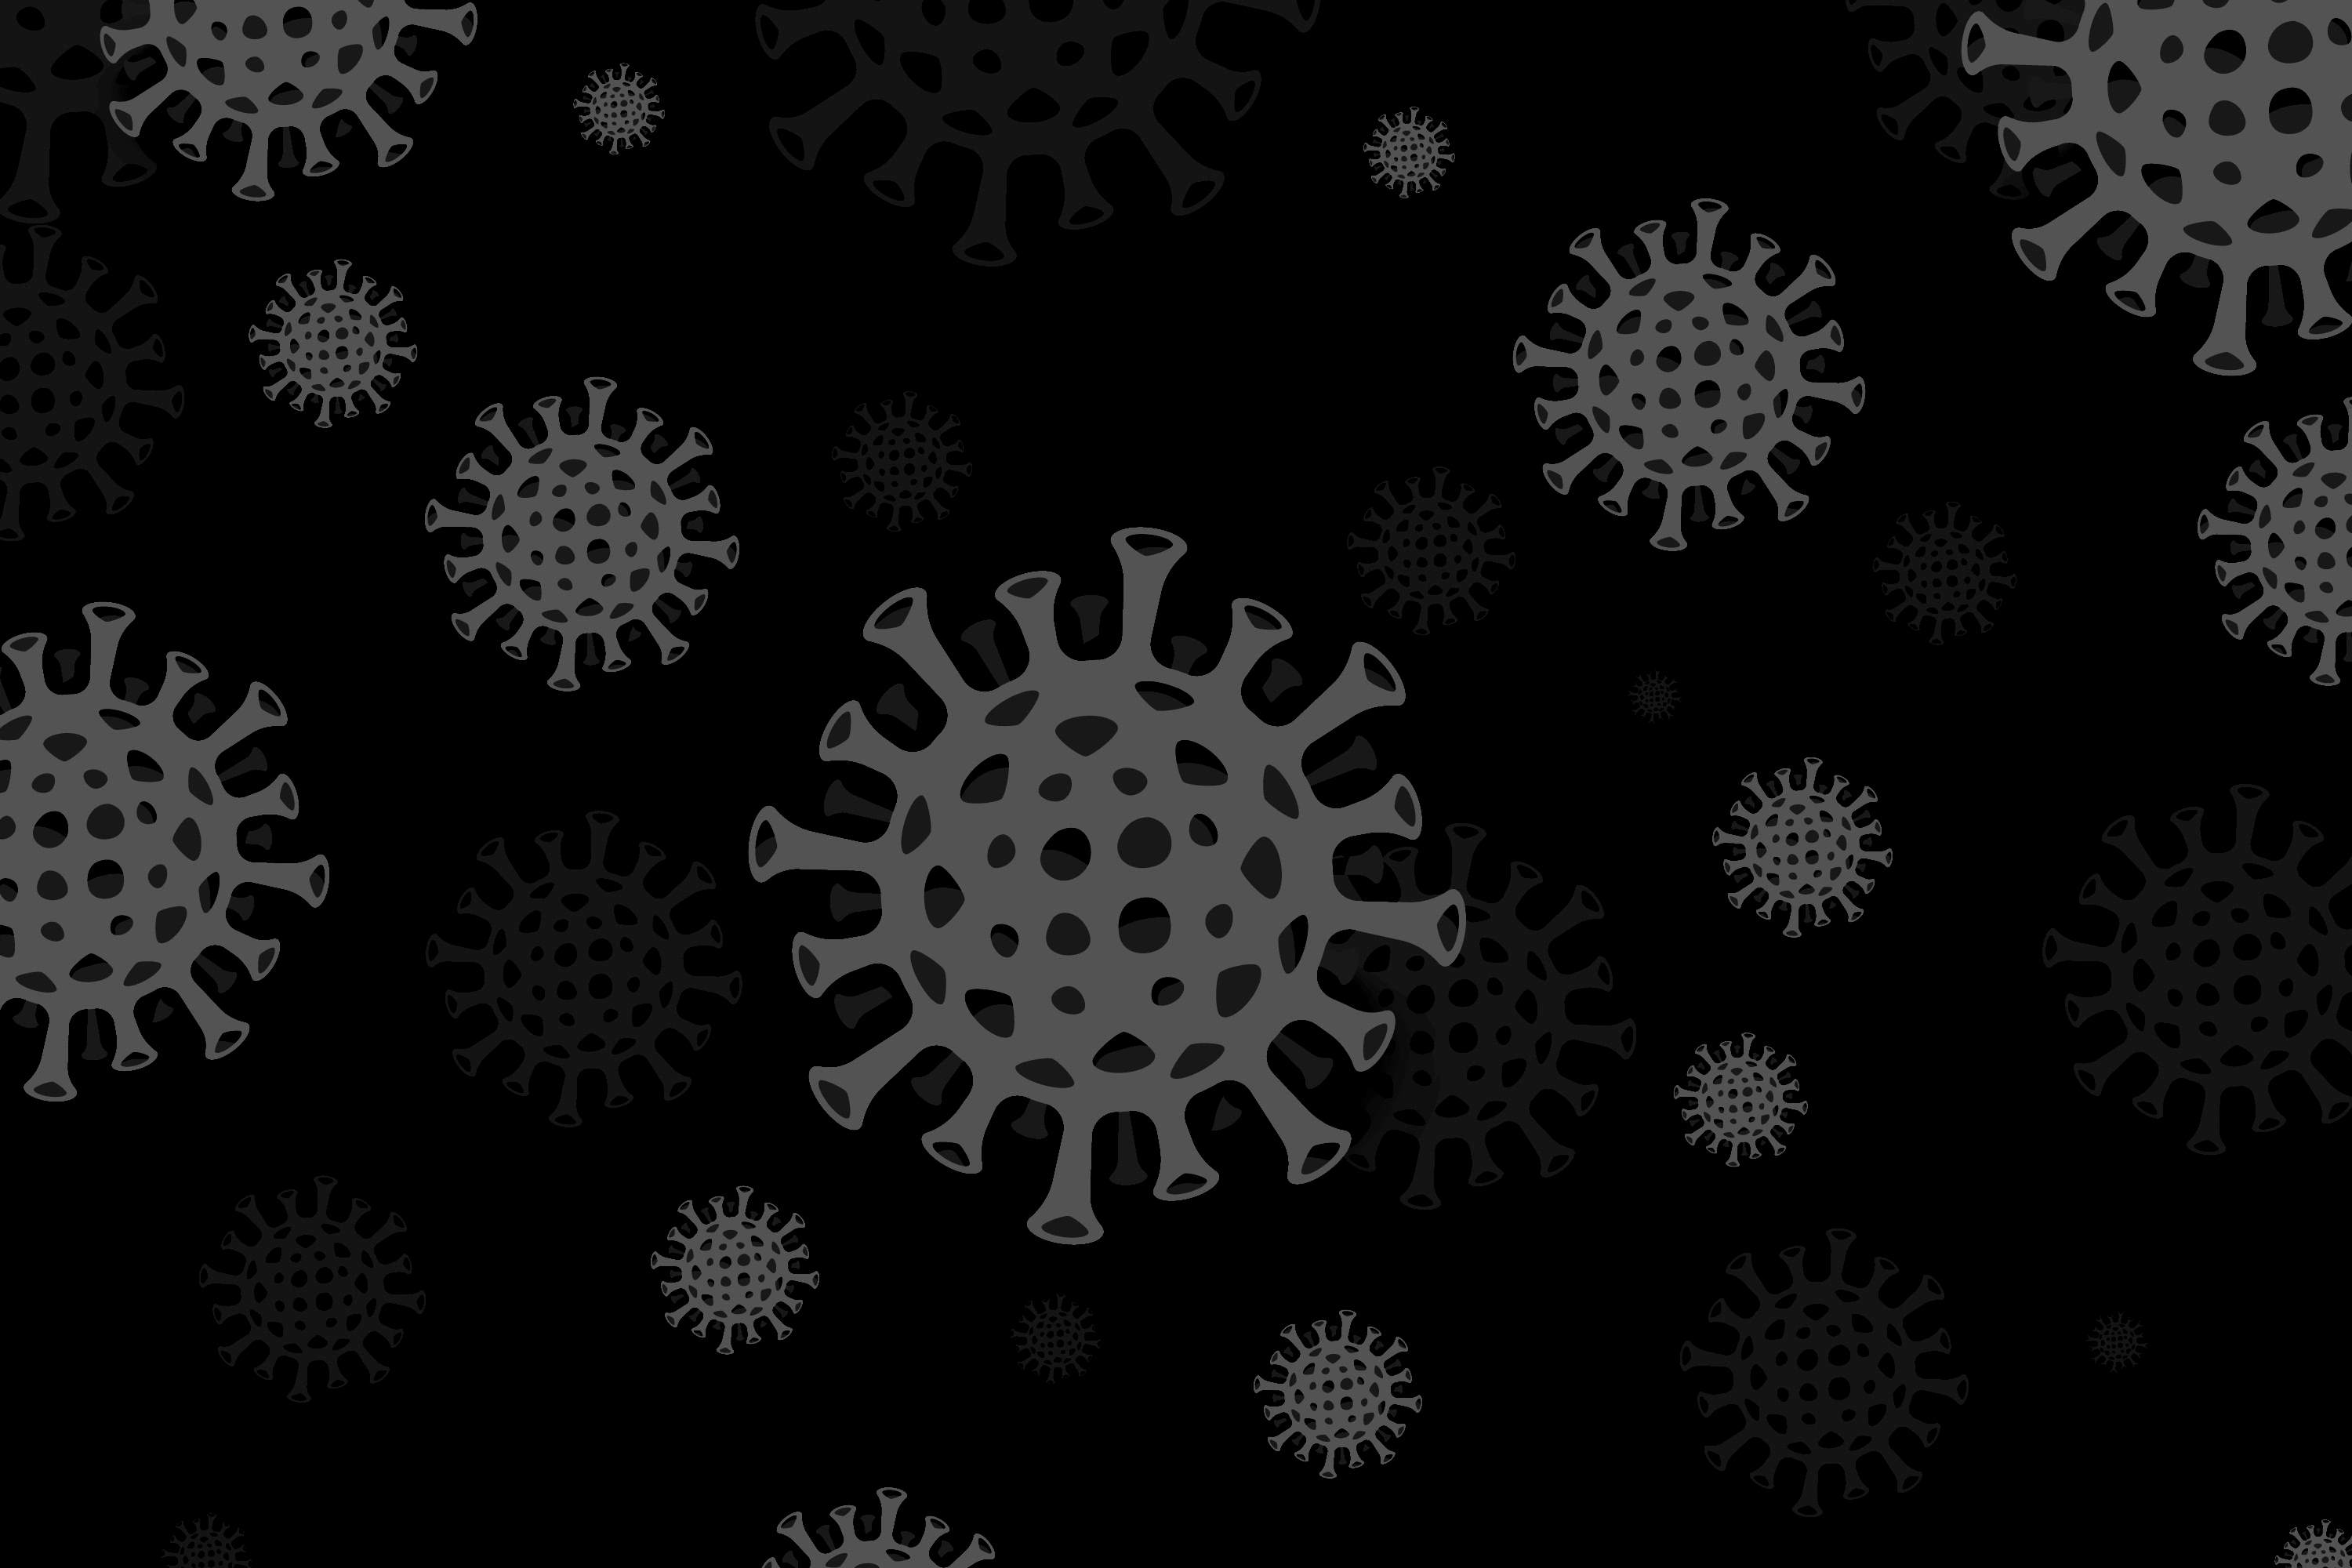 COVID-19 Virus Particles